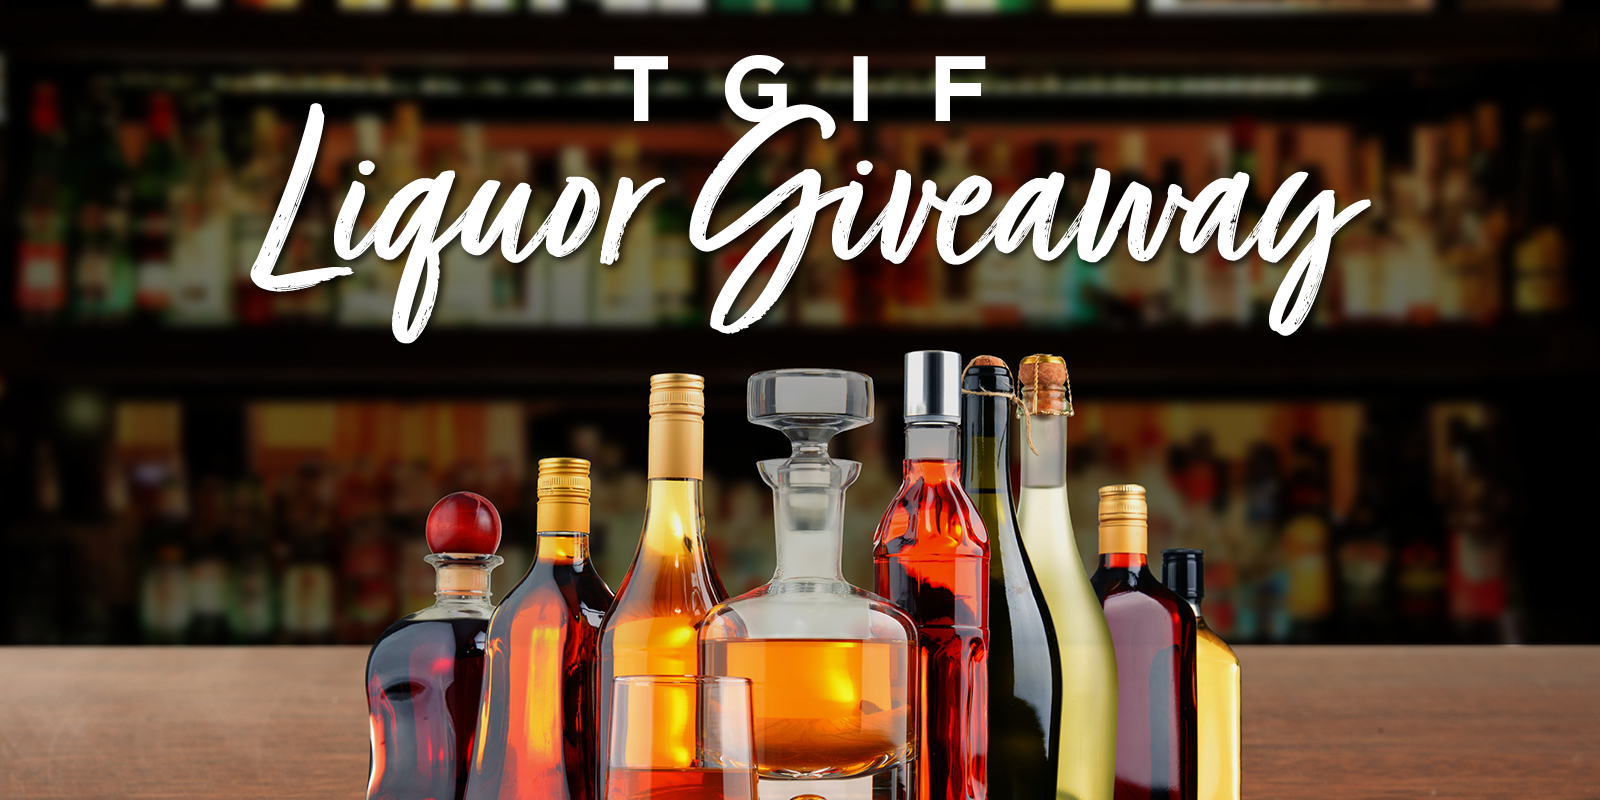 TGIF Liquor Giveaway - creative has bottles of liquor